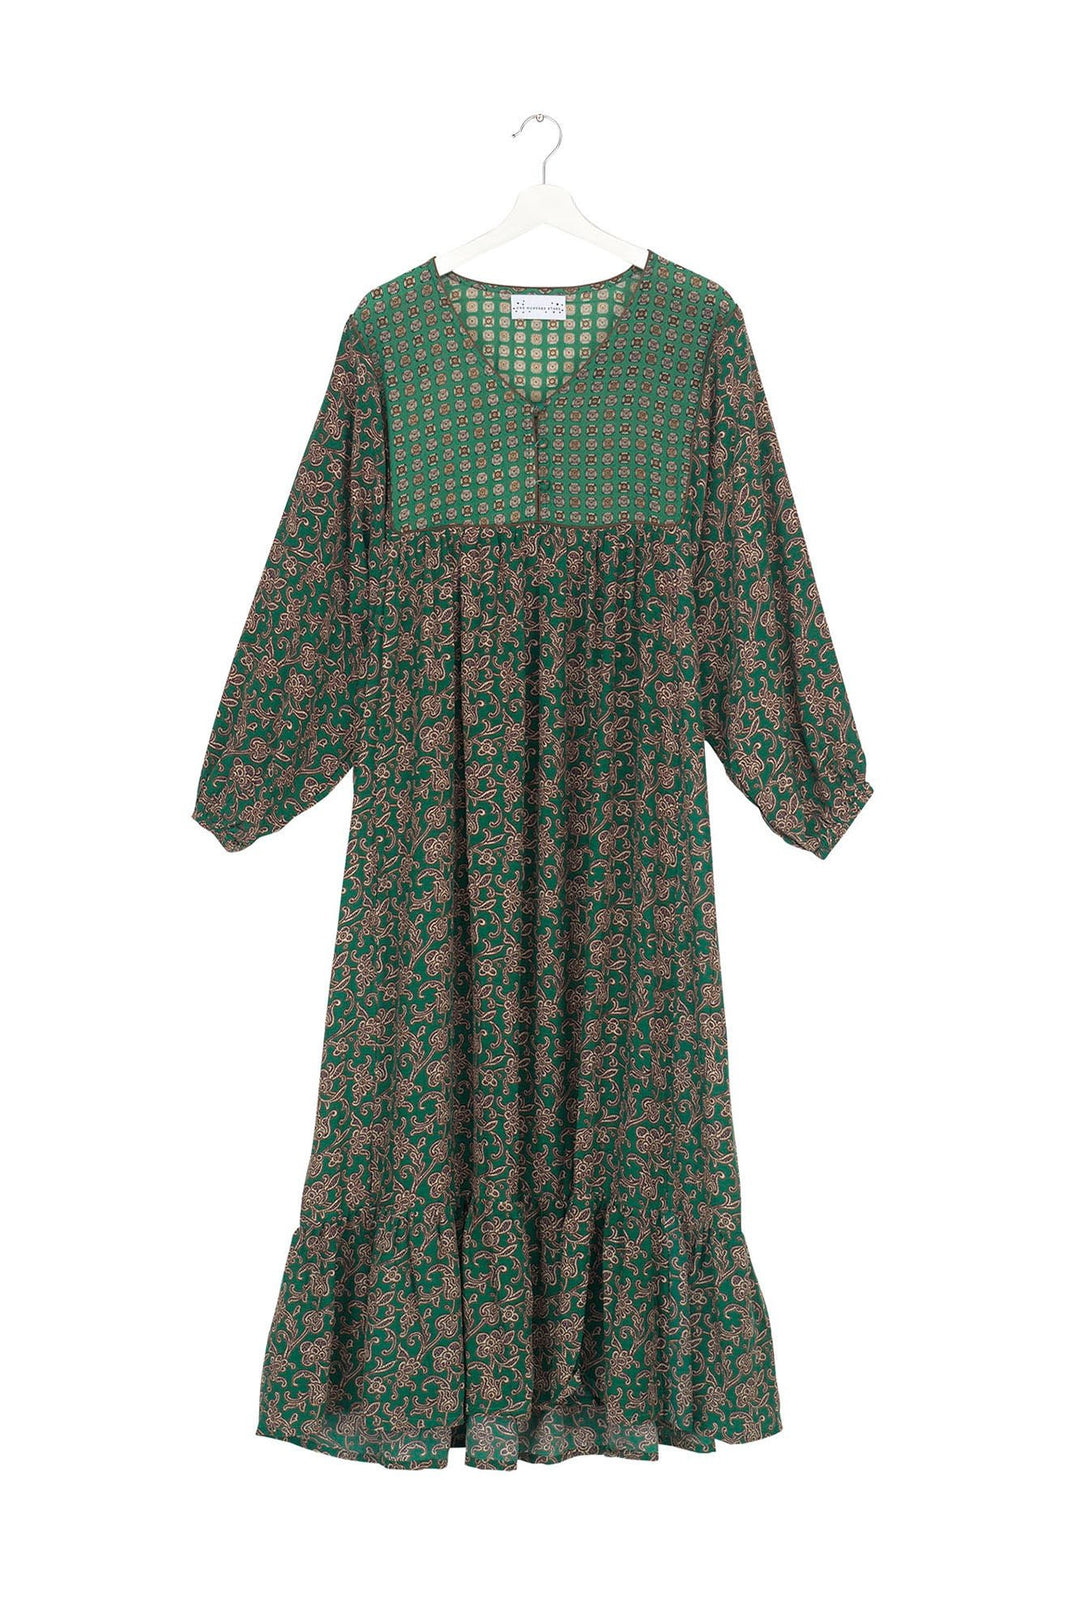 Floral Paisley Green Boho Dress - One Hundred Stars